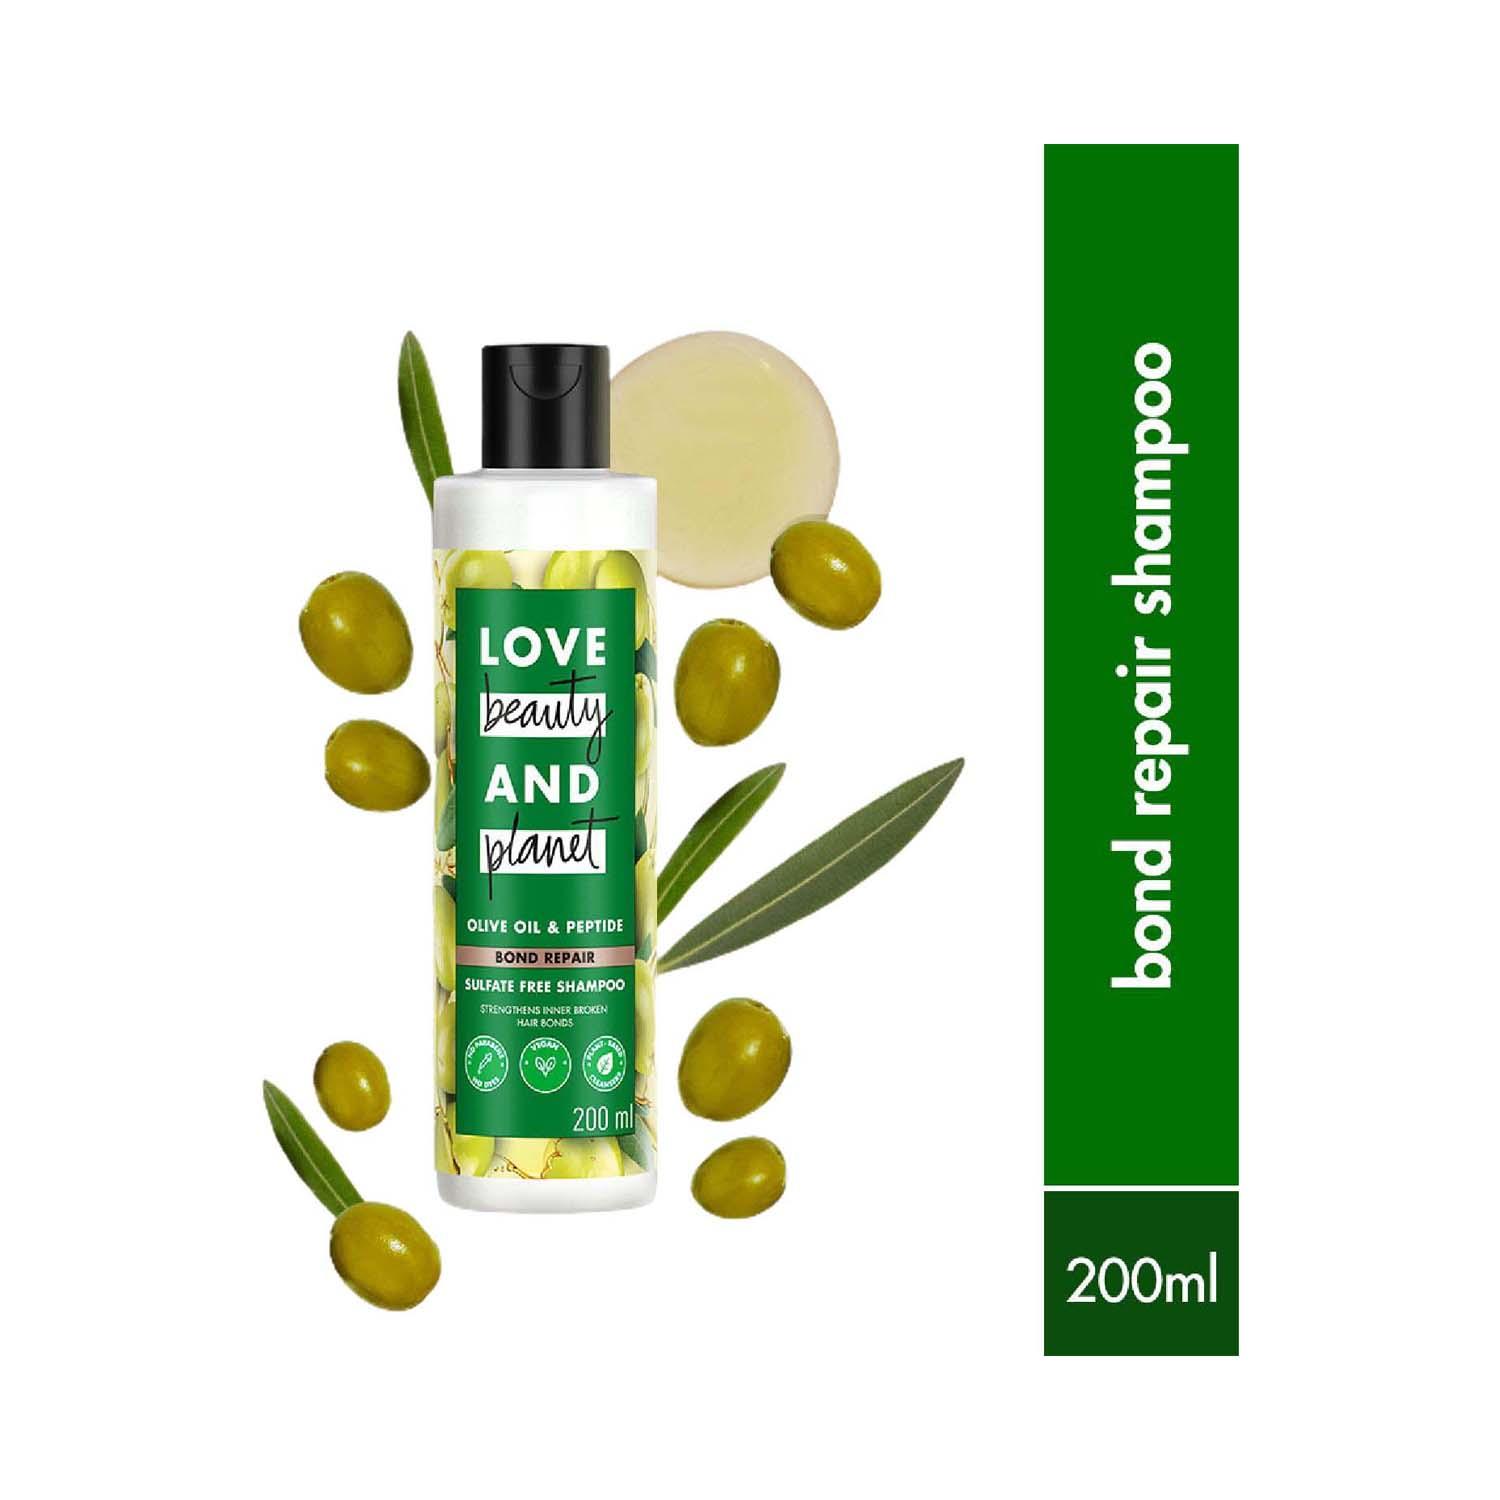 Love Beauty & Planet | Love Beauty & Planet Olive Oil & Peptide Bond Repair Hair Shampoo (200 ml)